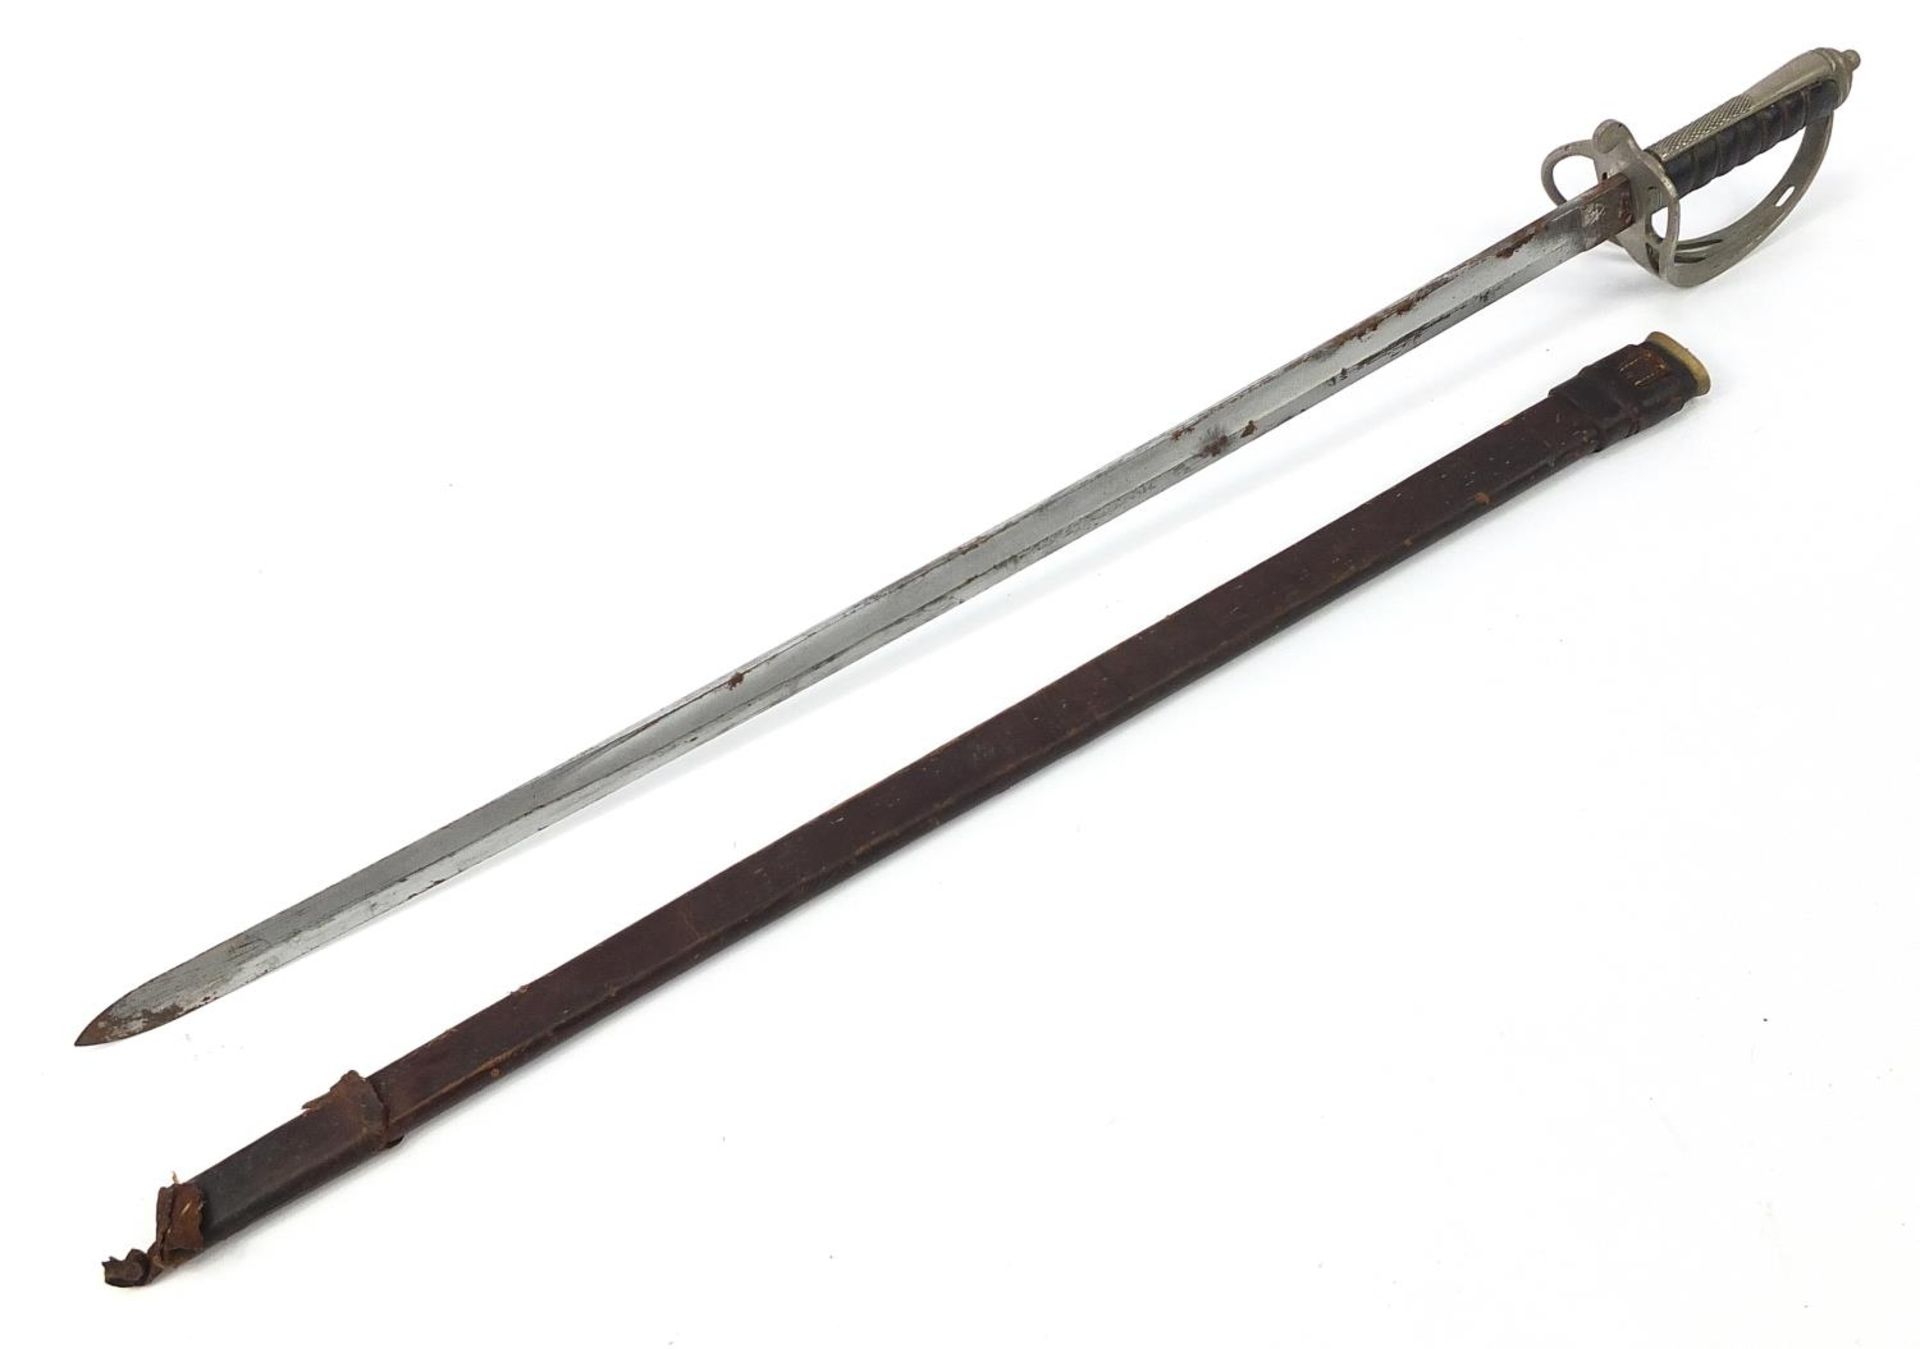 Military interest British military dress sword by Manton & Co of Calcutta and Delhi, 98cm in